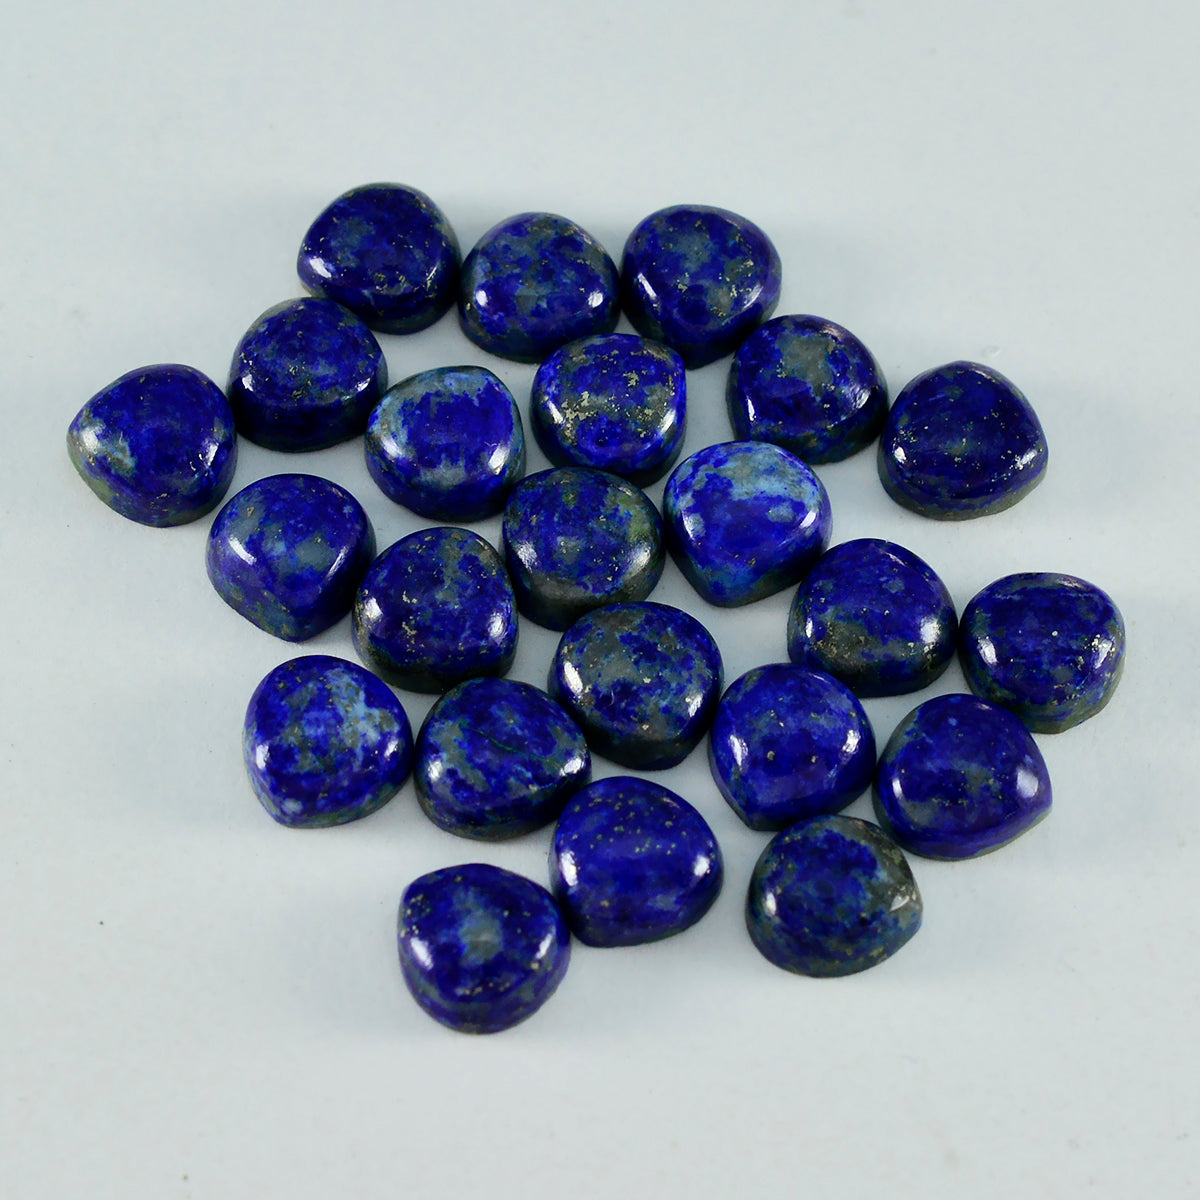 Riyogems 1PC blauwe lapis lazuli cabochon 5x5 mm hartvorm AA-kwaliteit losse edelsteen